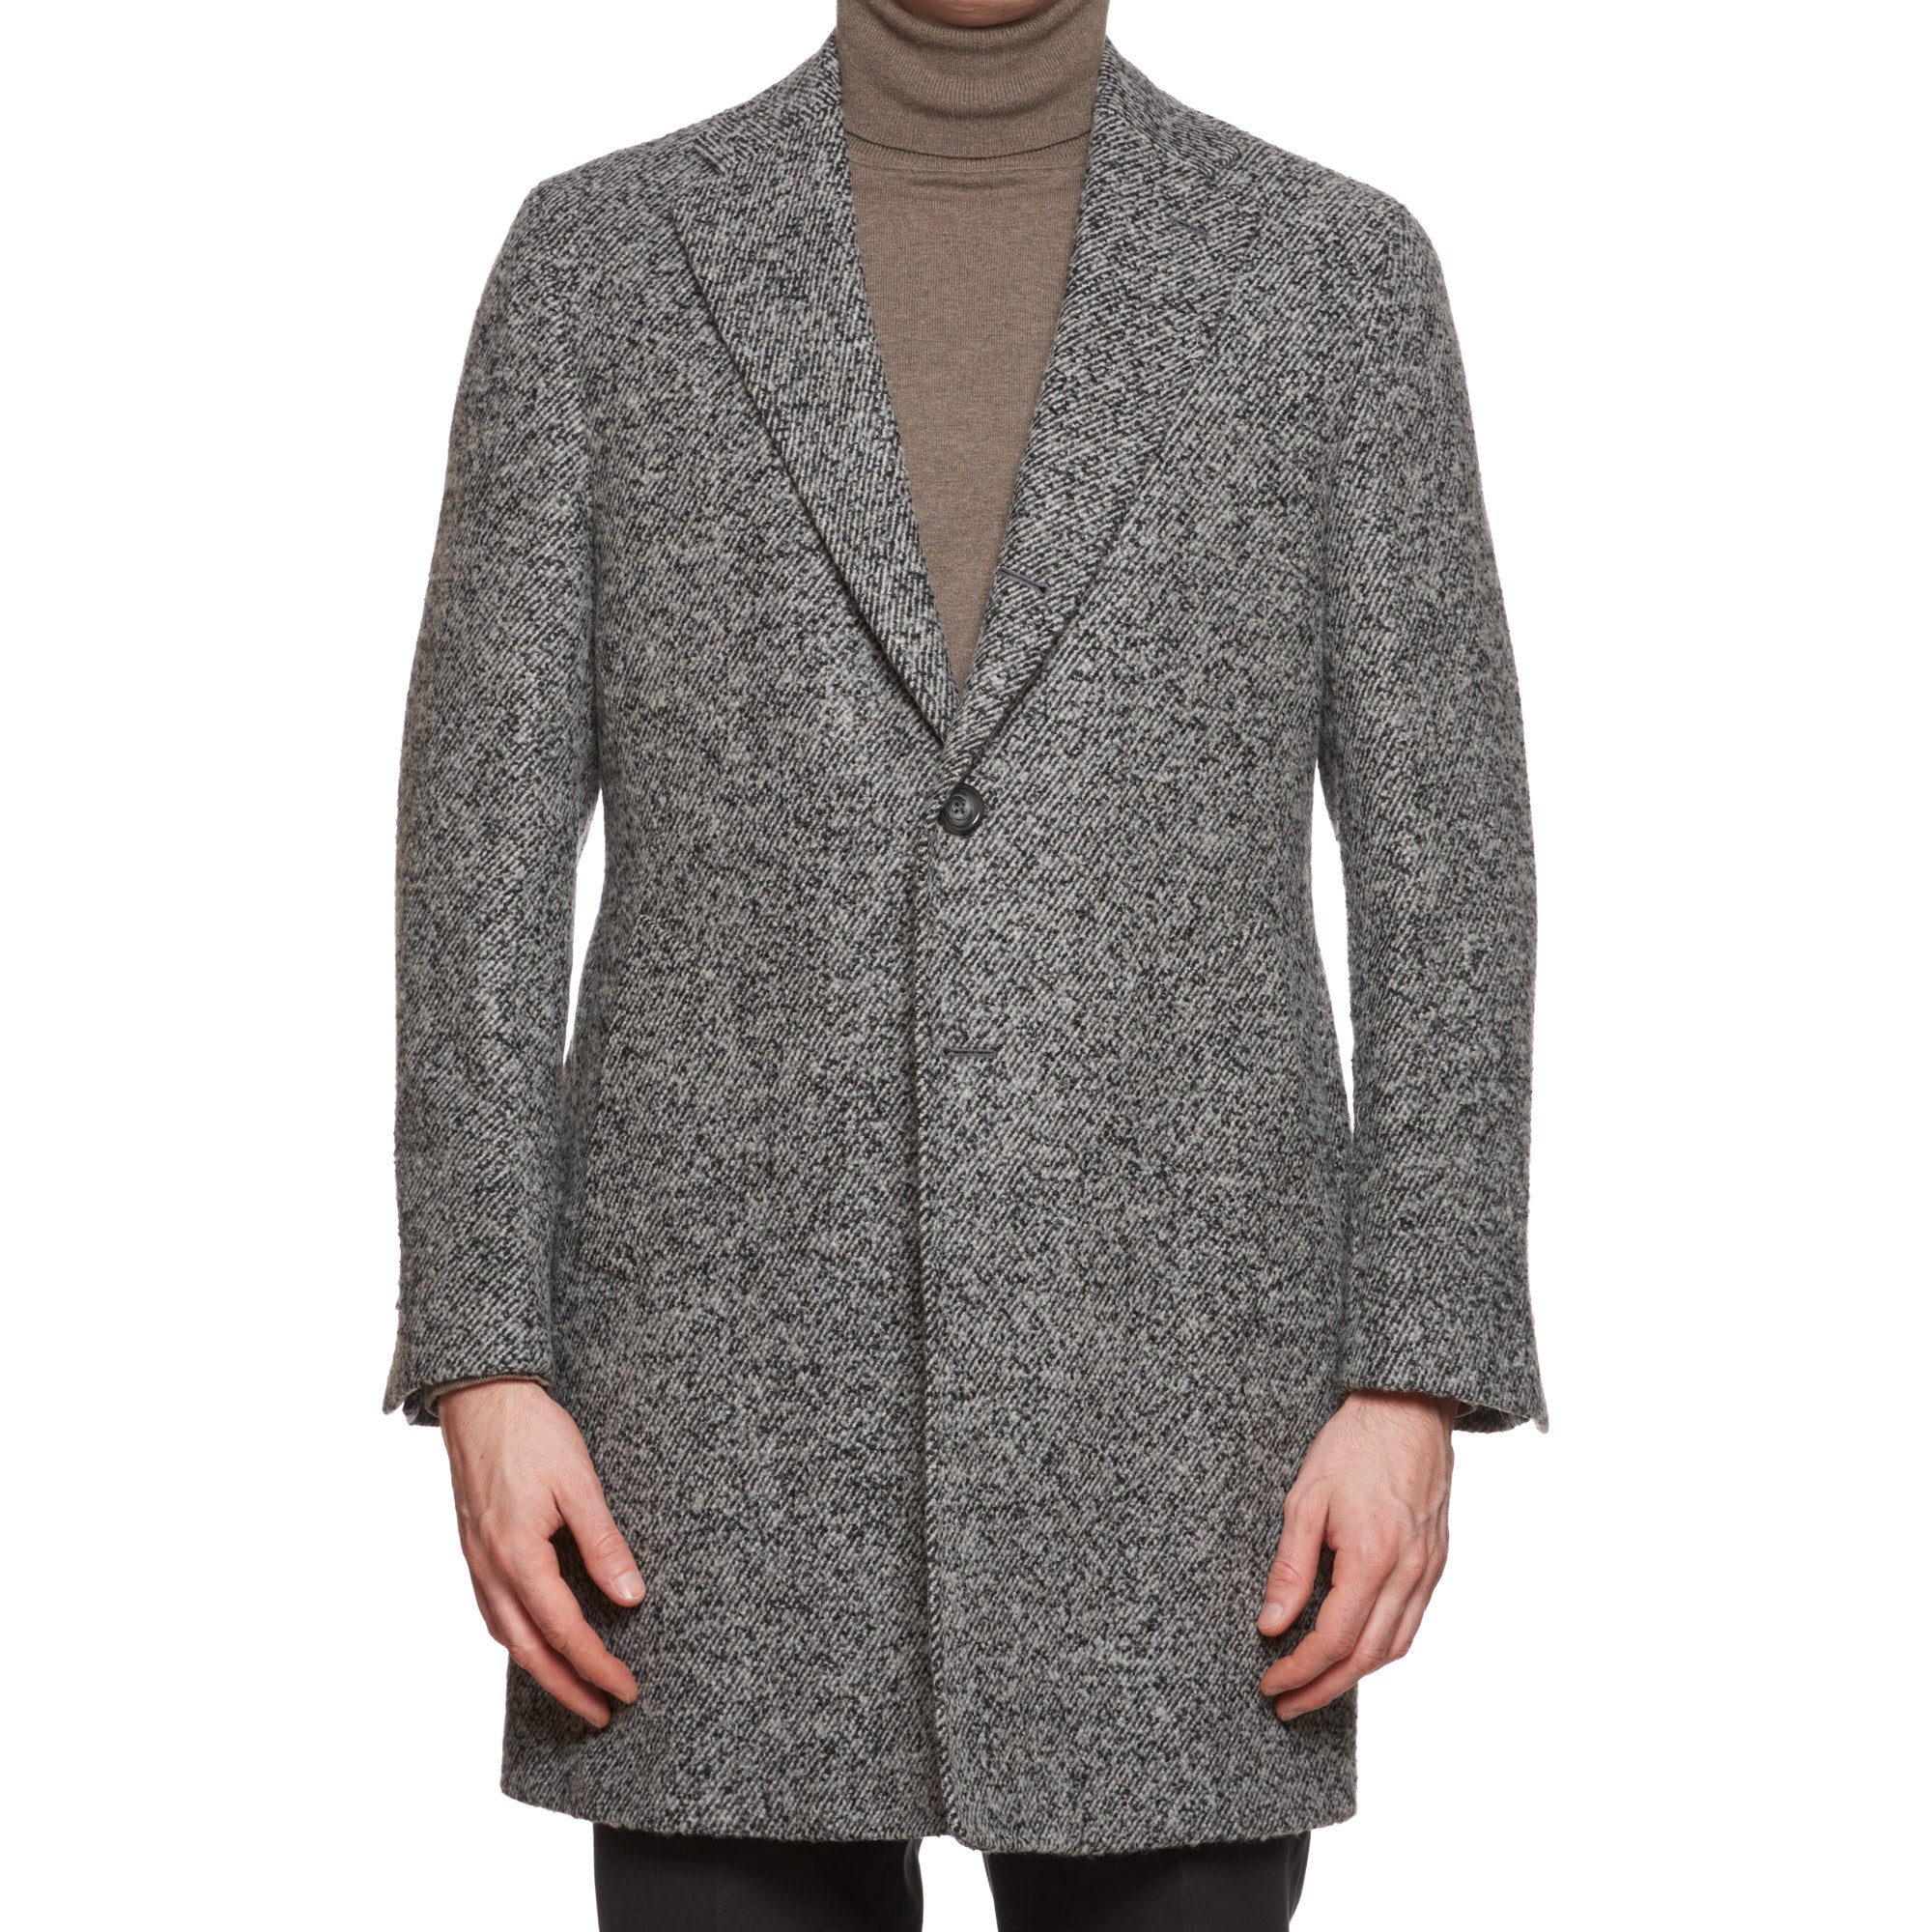 VINCENZO PALUMBO Napoli "Viky" Gray Wool Tweed Back Belted Jacket Coat NEW